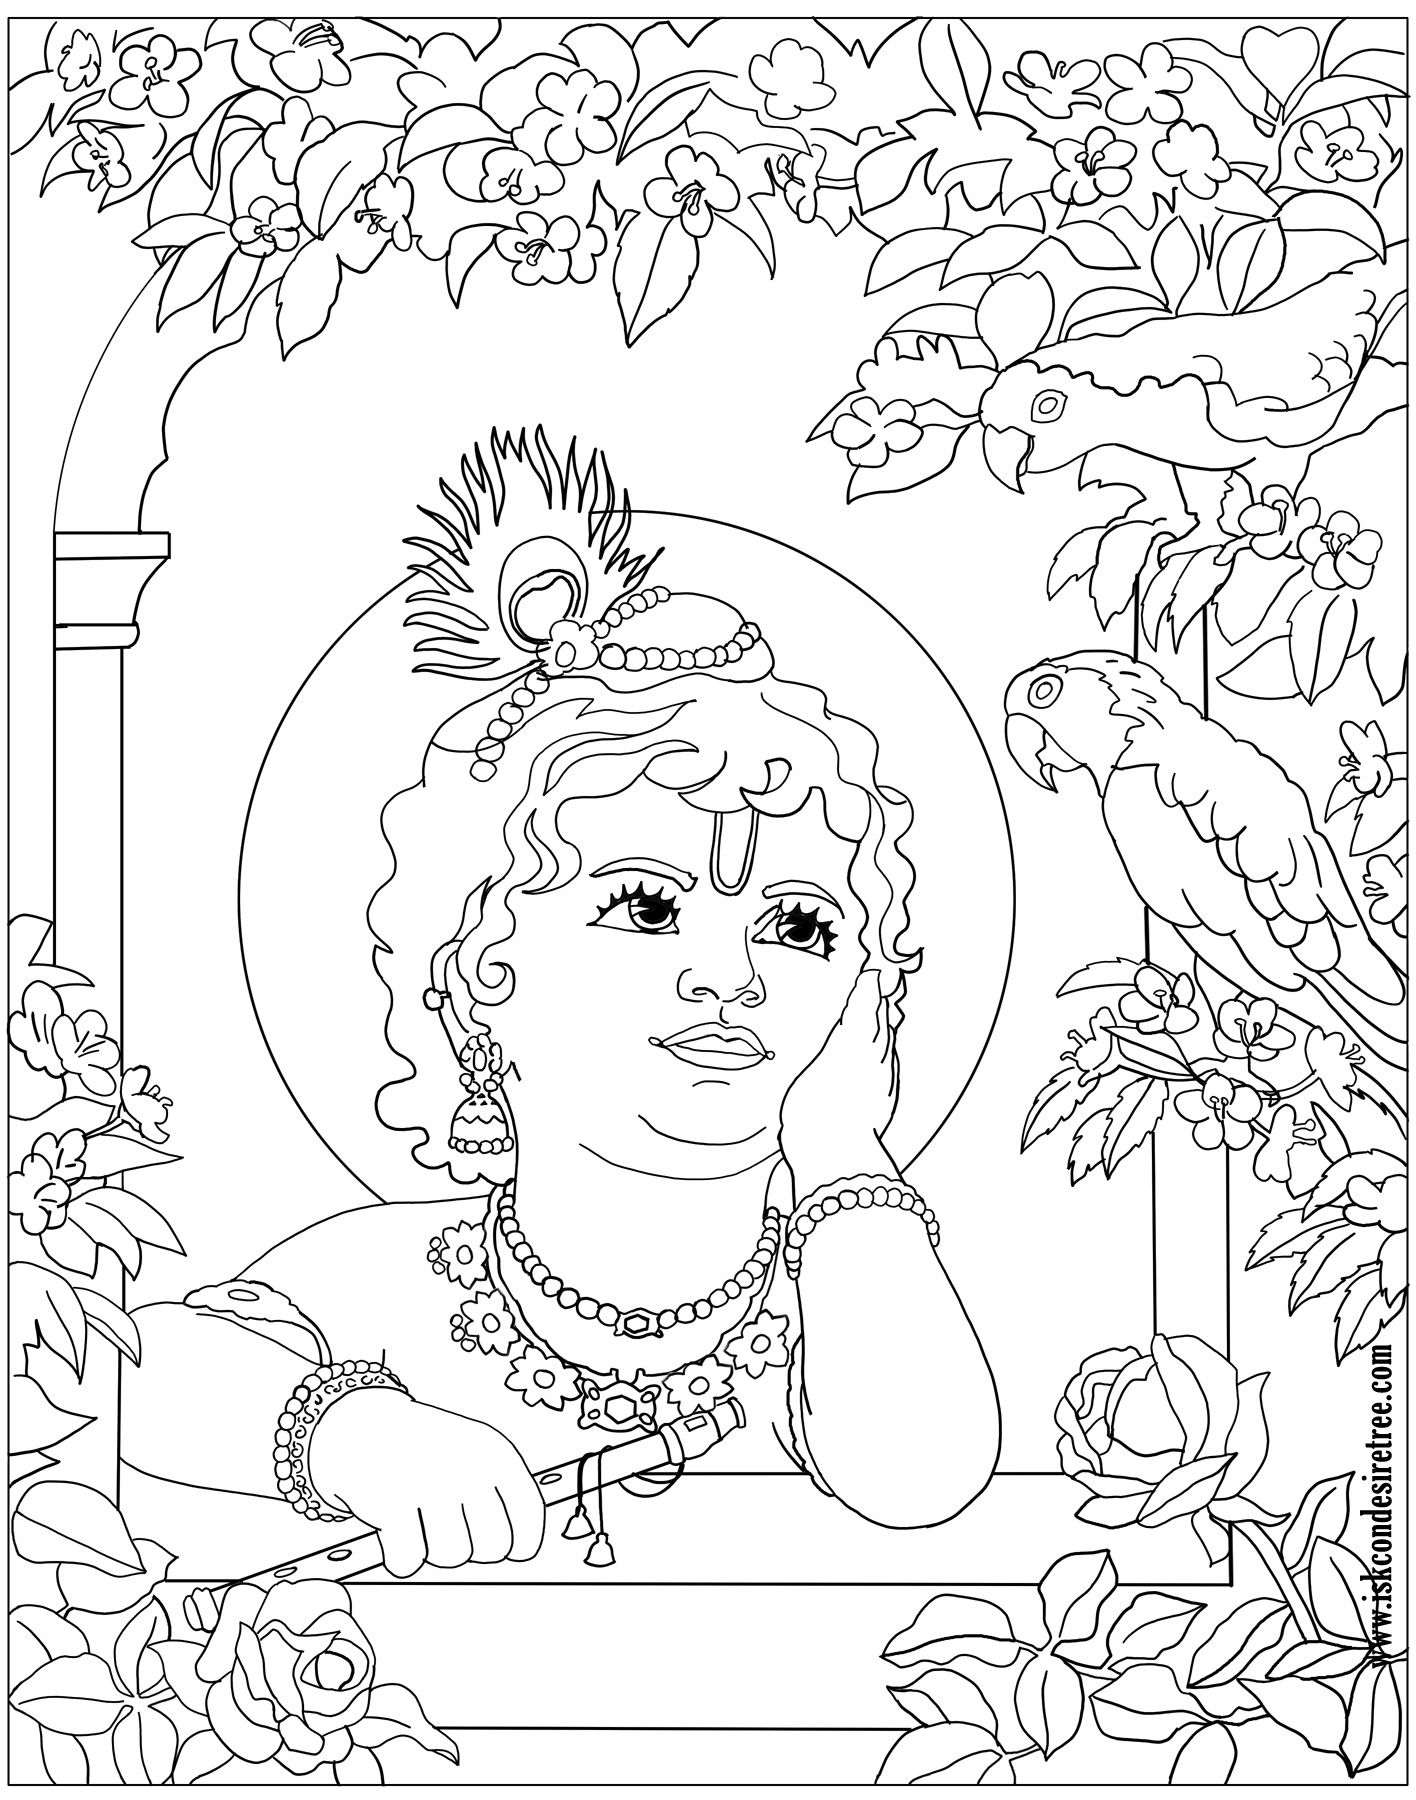 Krishna Coloring Pages Printable | Krishna art, Indian art ...